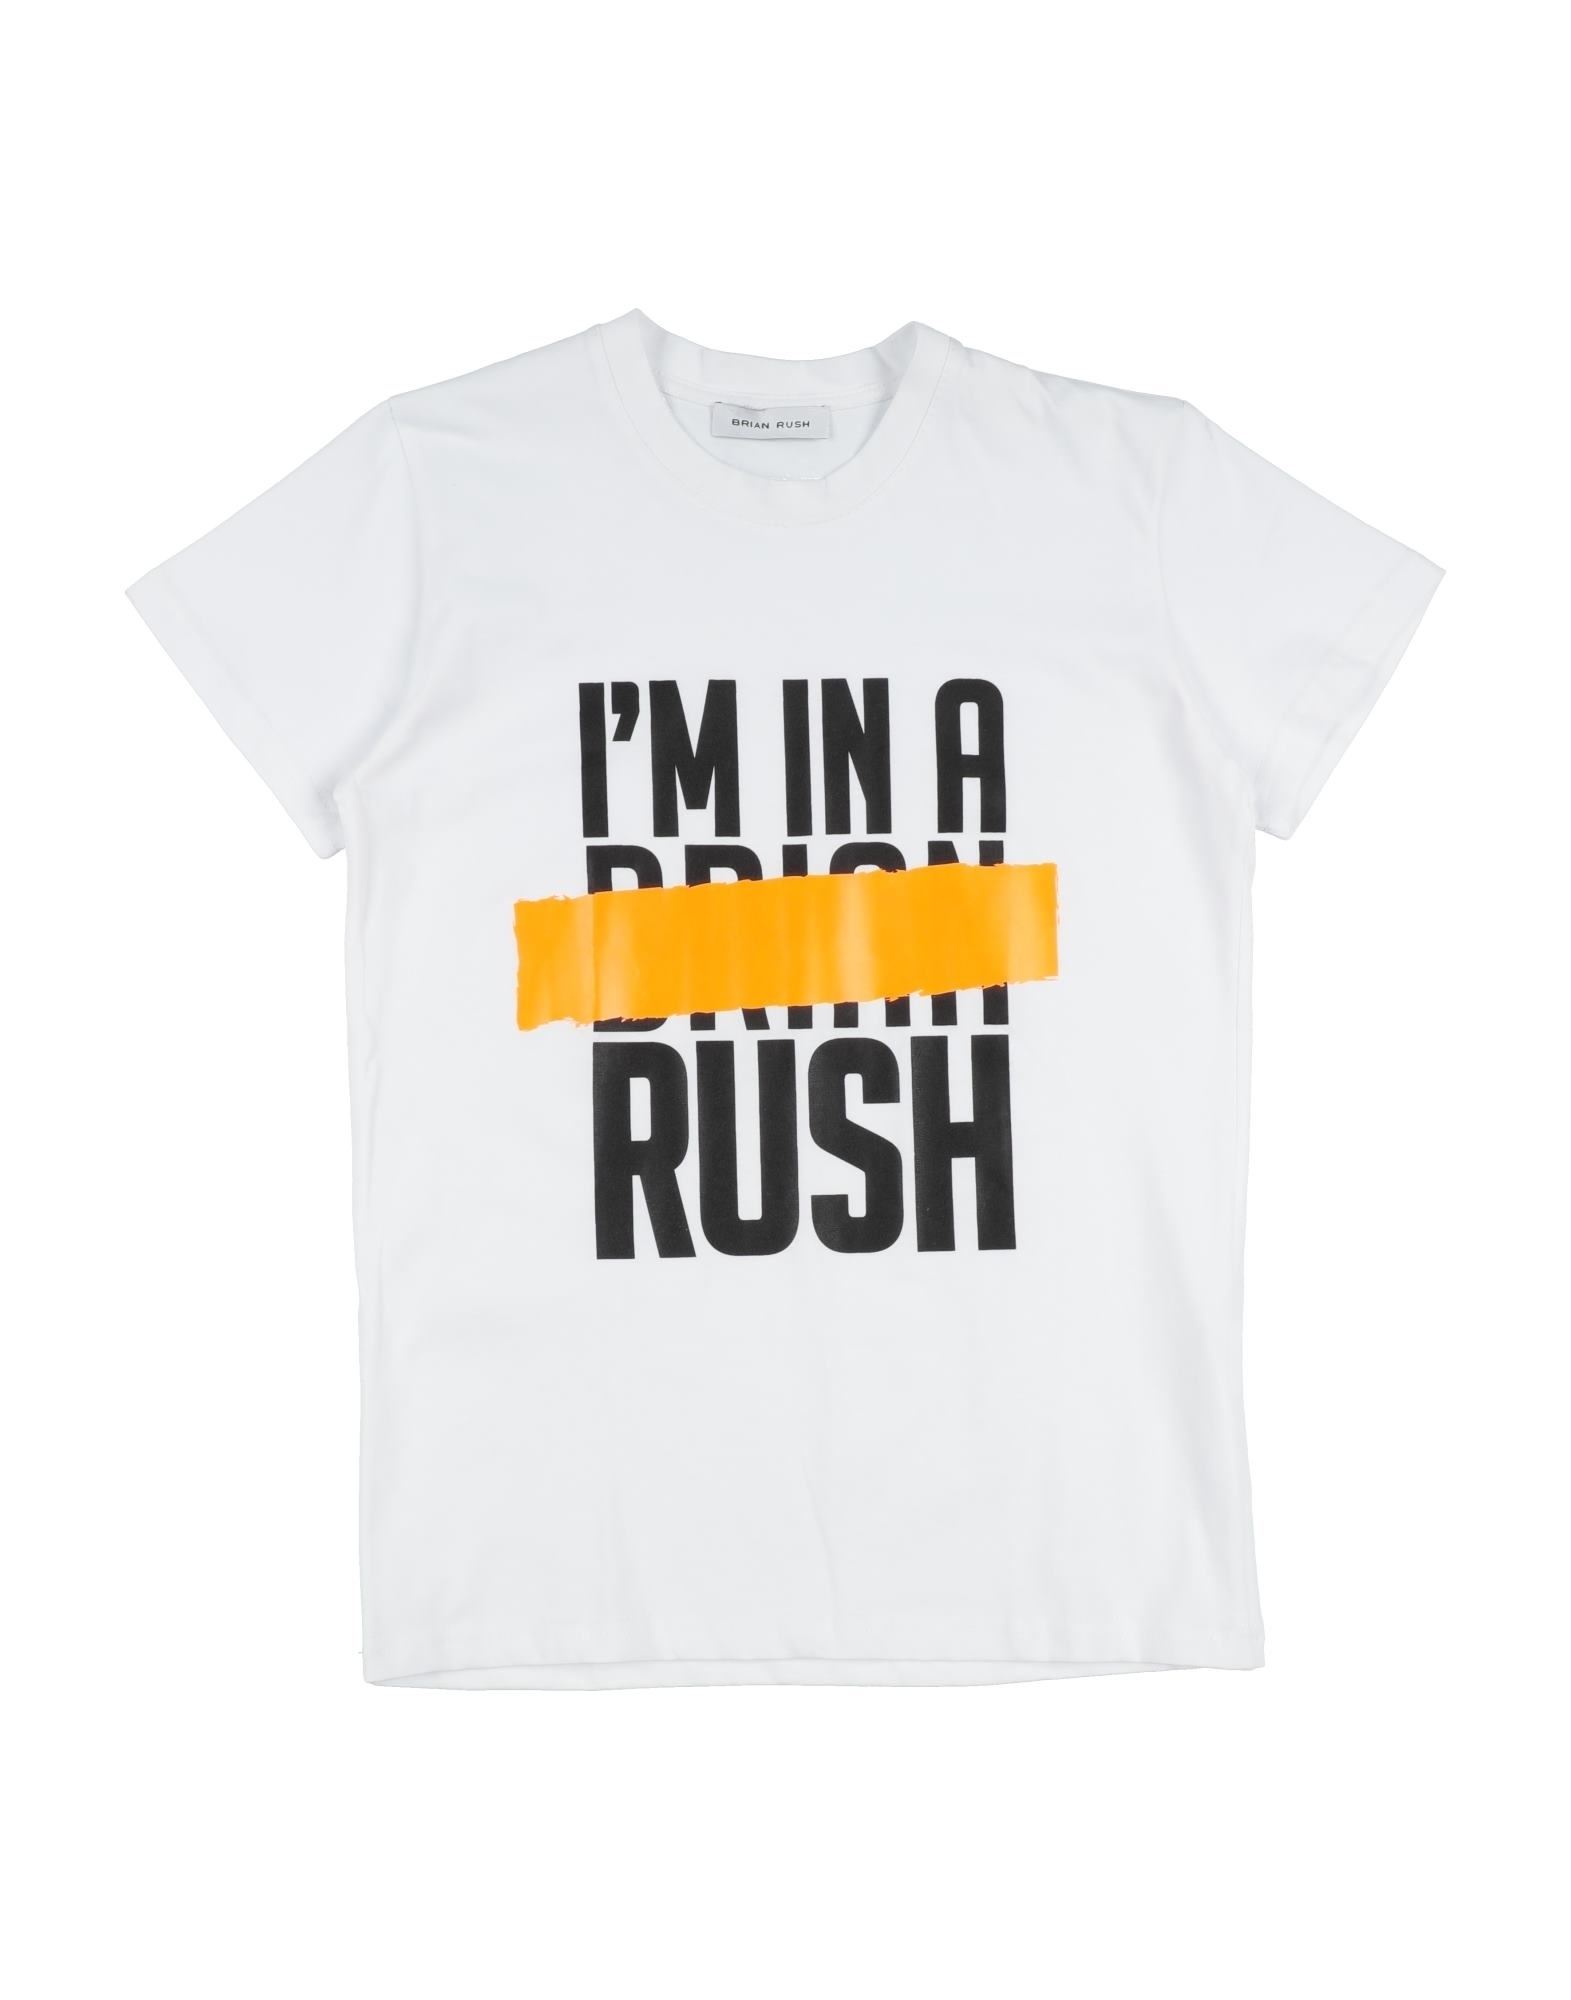 BRIAN RUSH T-shirts - Item 12536554